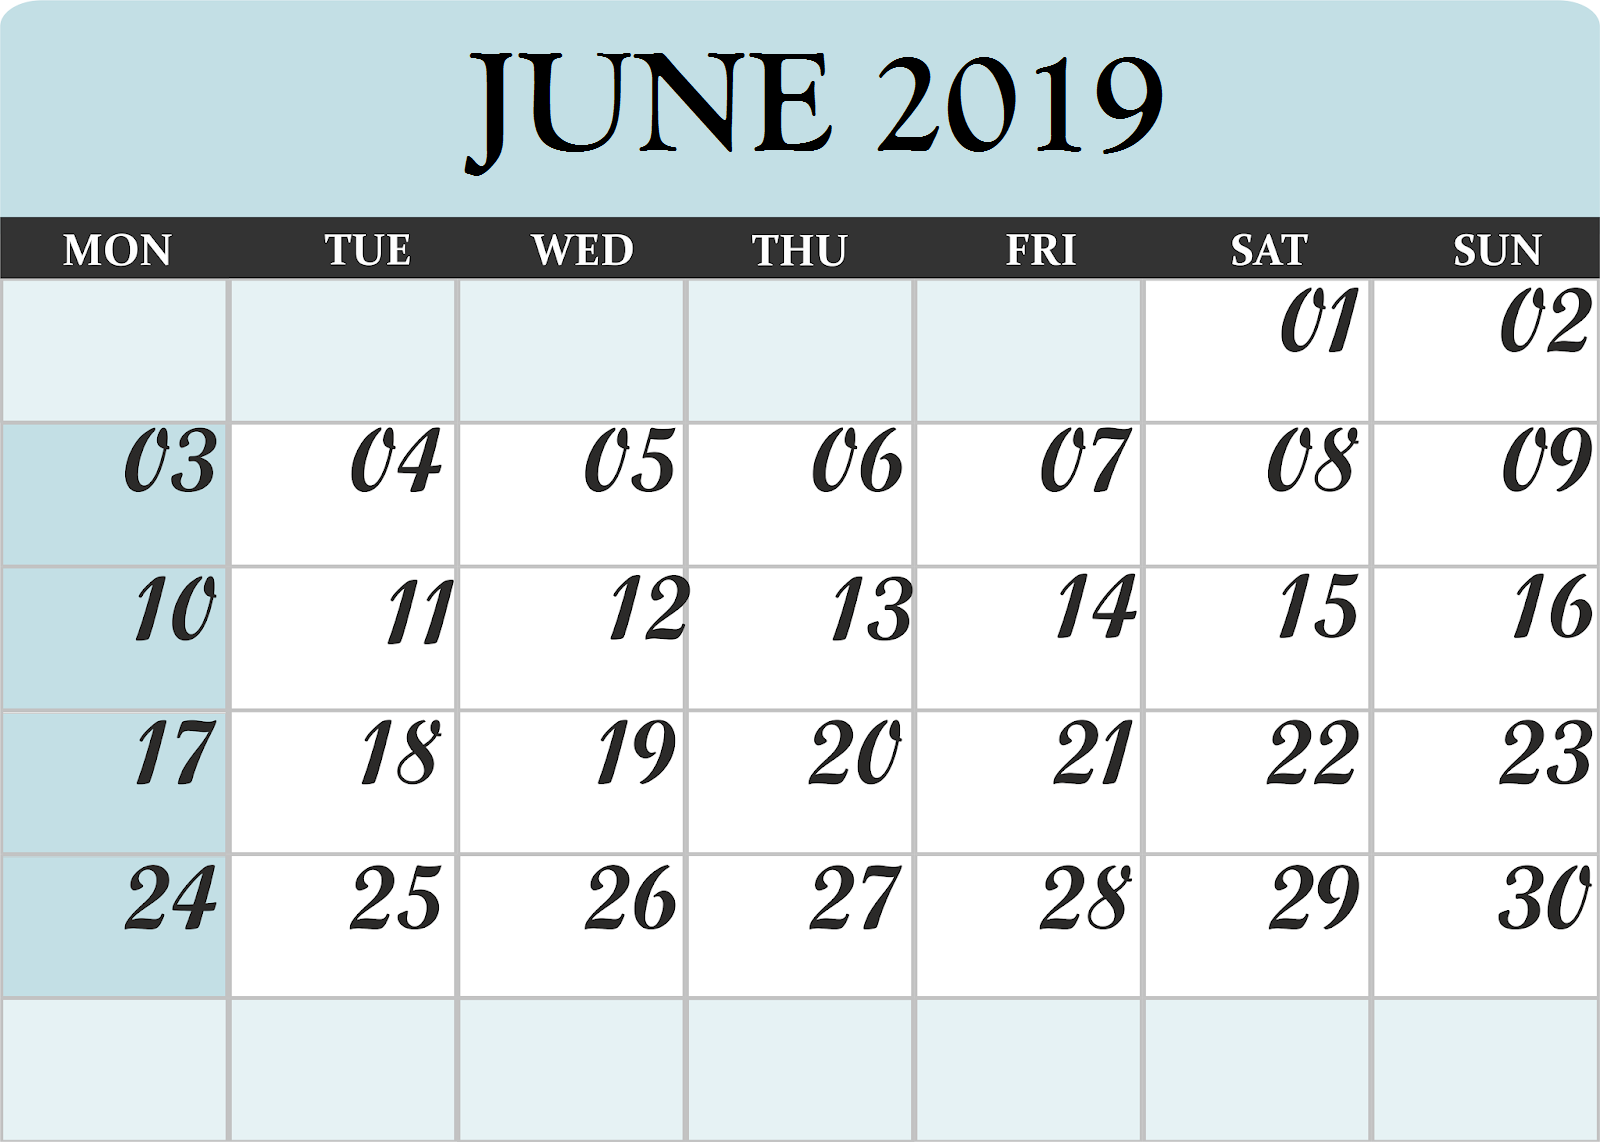 Print June 2019 Desk Calendar